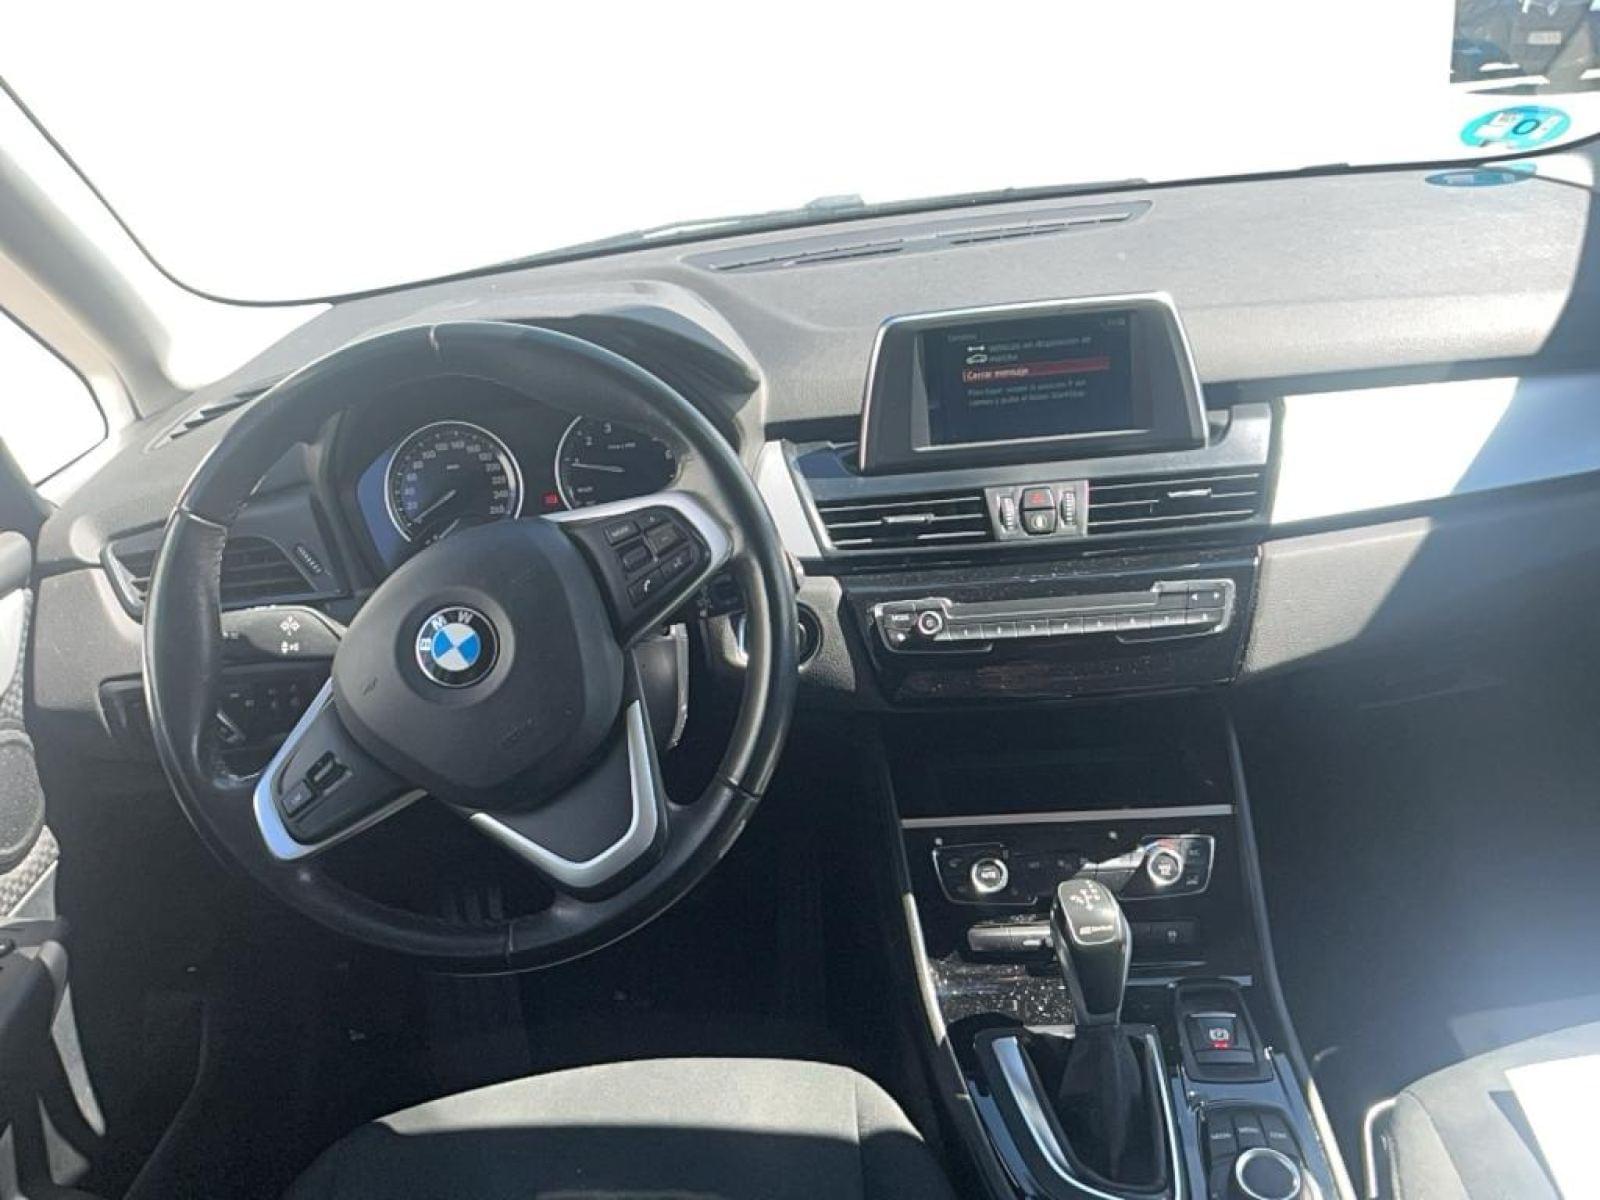 BMW SERIE 2 ACTIVE TOURER 225 XE IPERFORMANCE 1.5 225 CV AT6 E6DT 3 